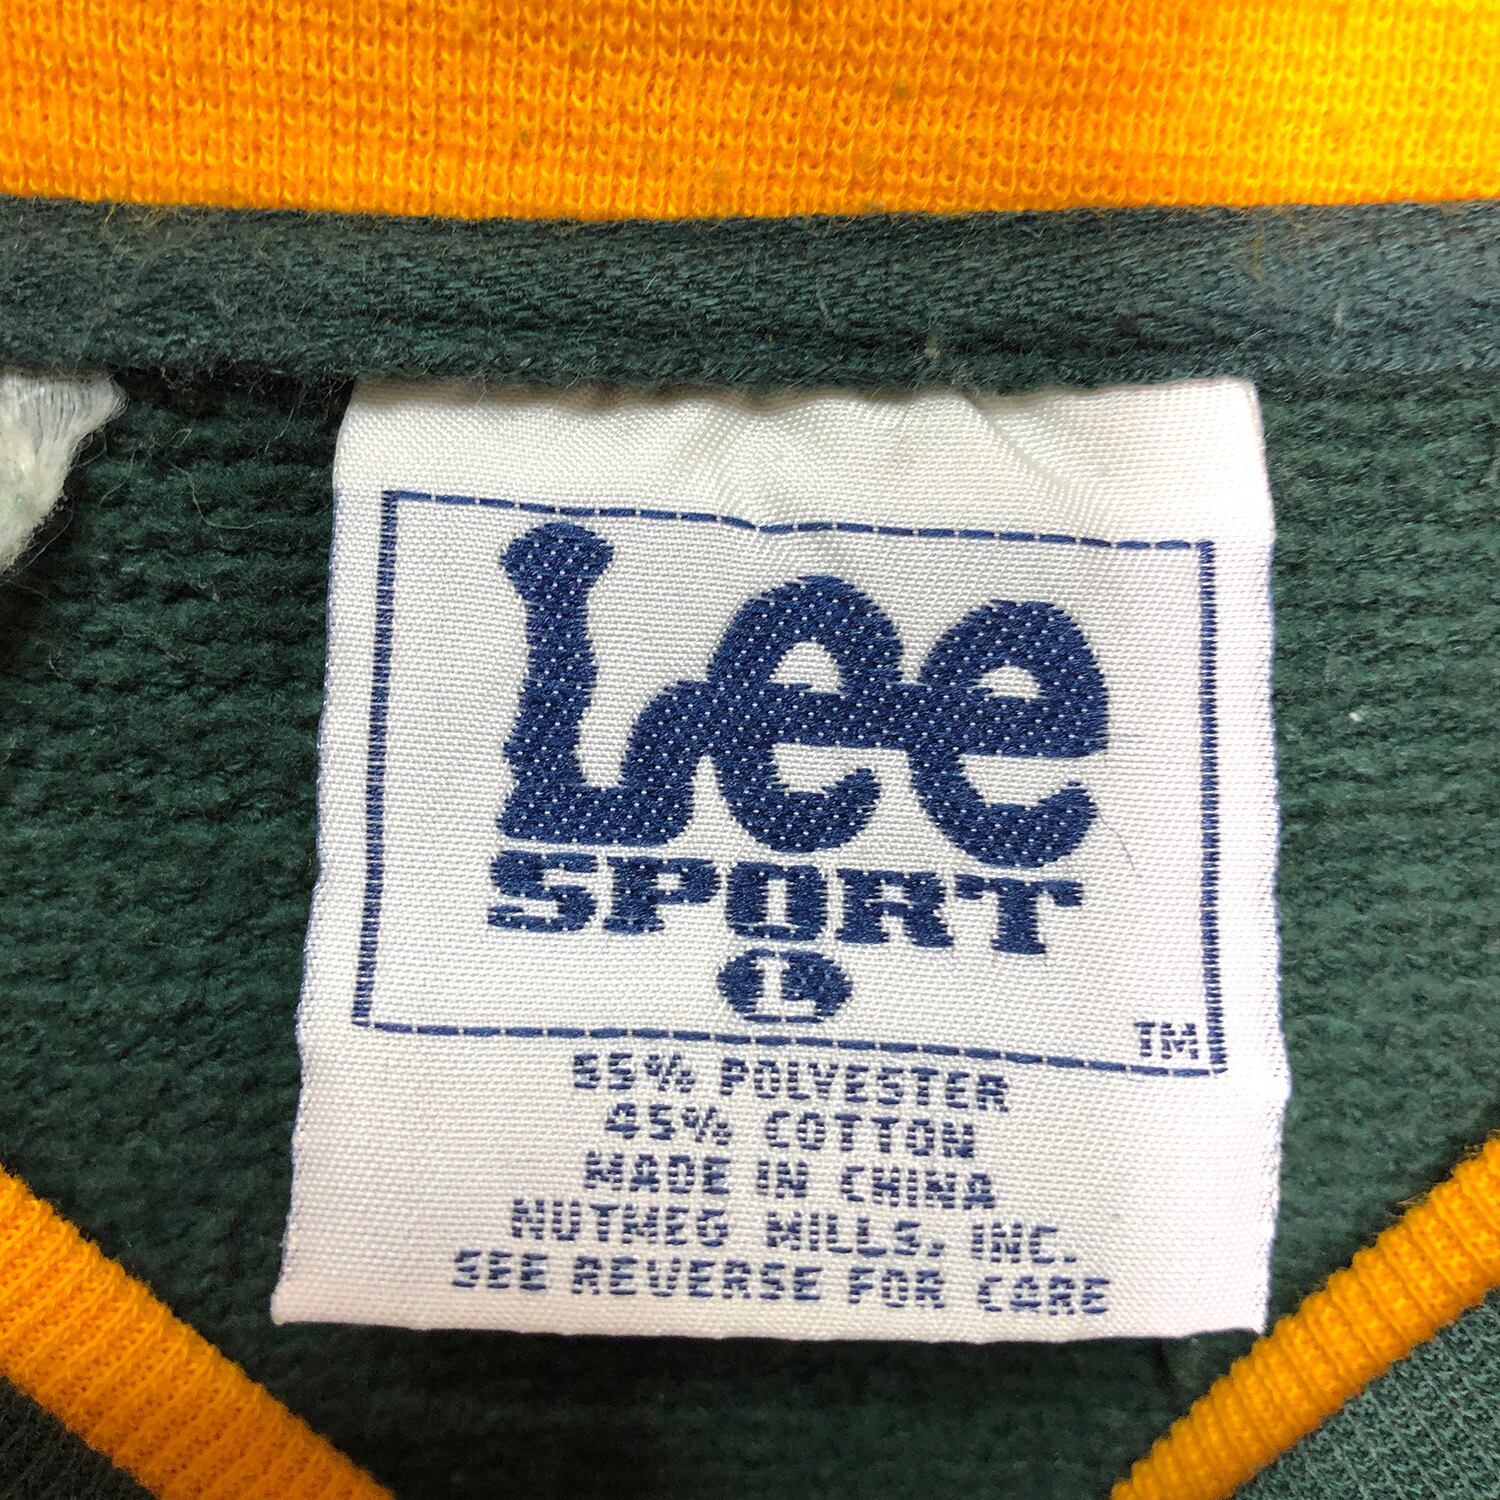 LEE NFL パッカーズ アーチロゴ刺繍 スウェット XL グリーン 緑 黄色